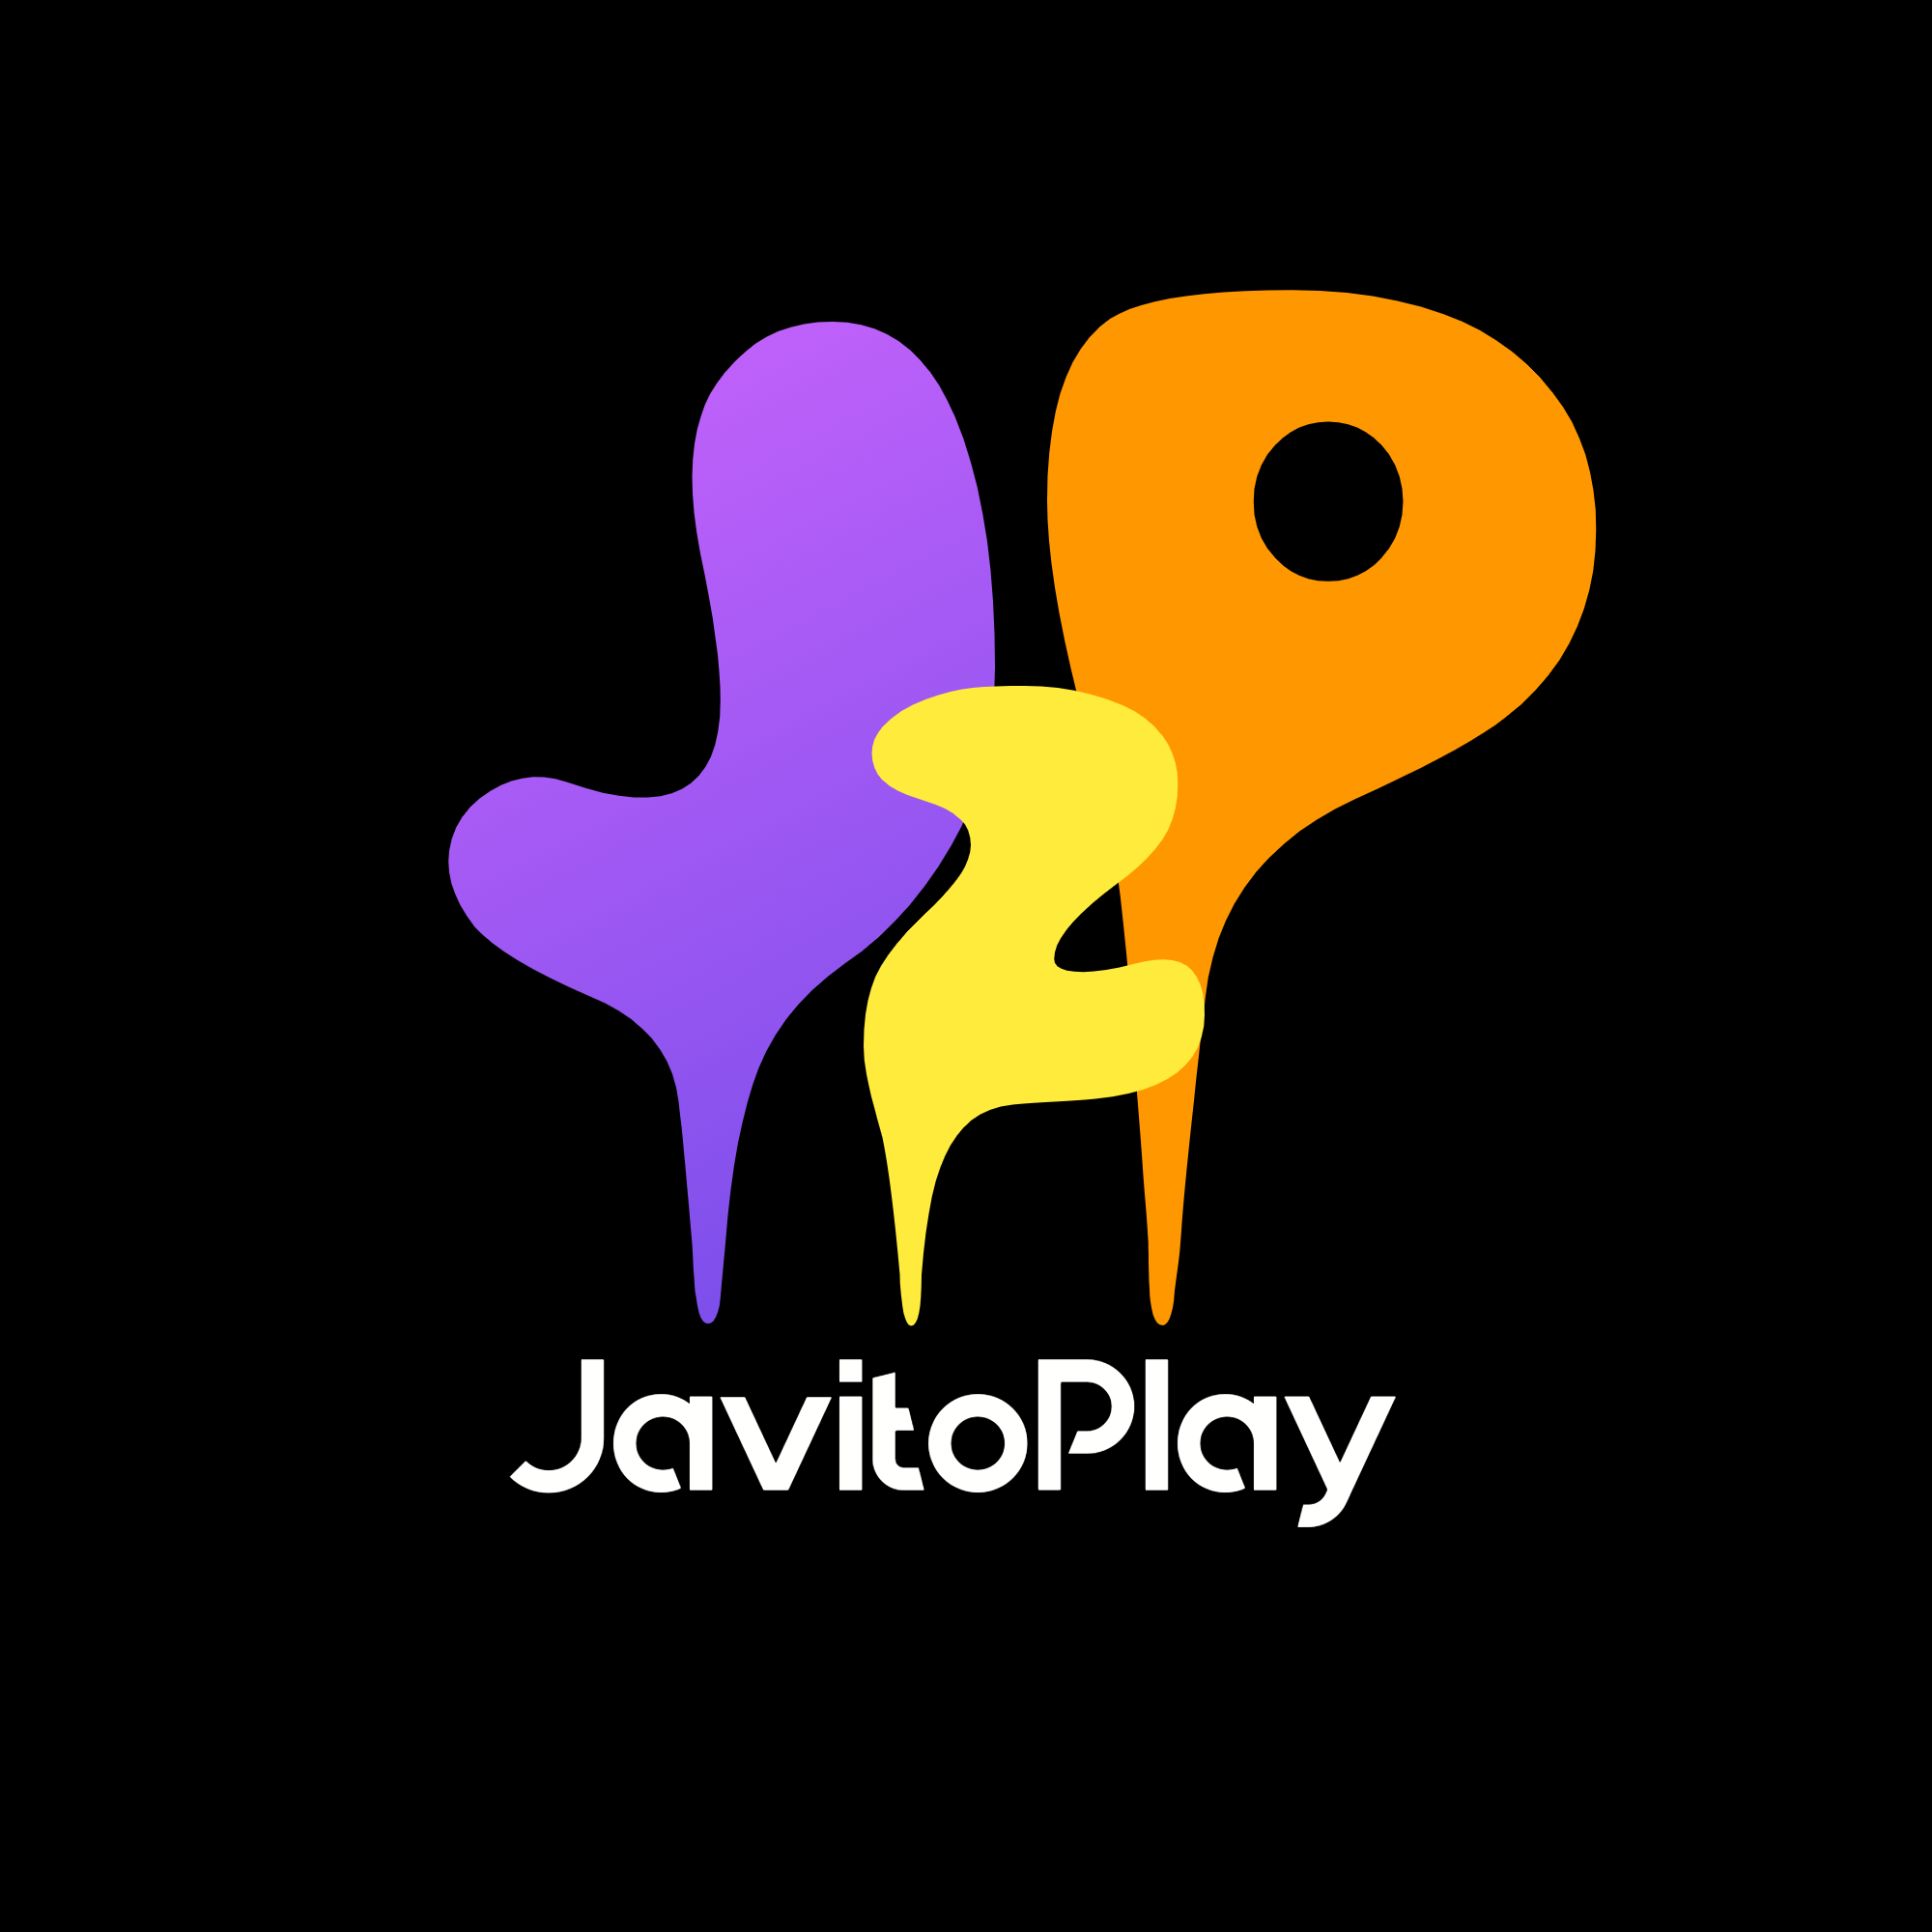 JavitoPlay